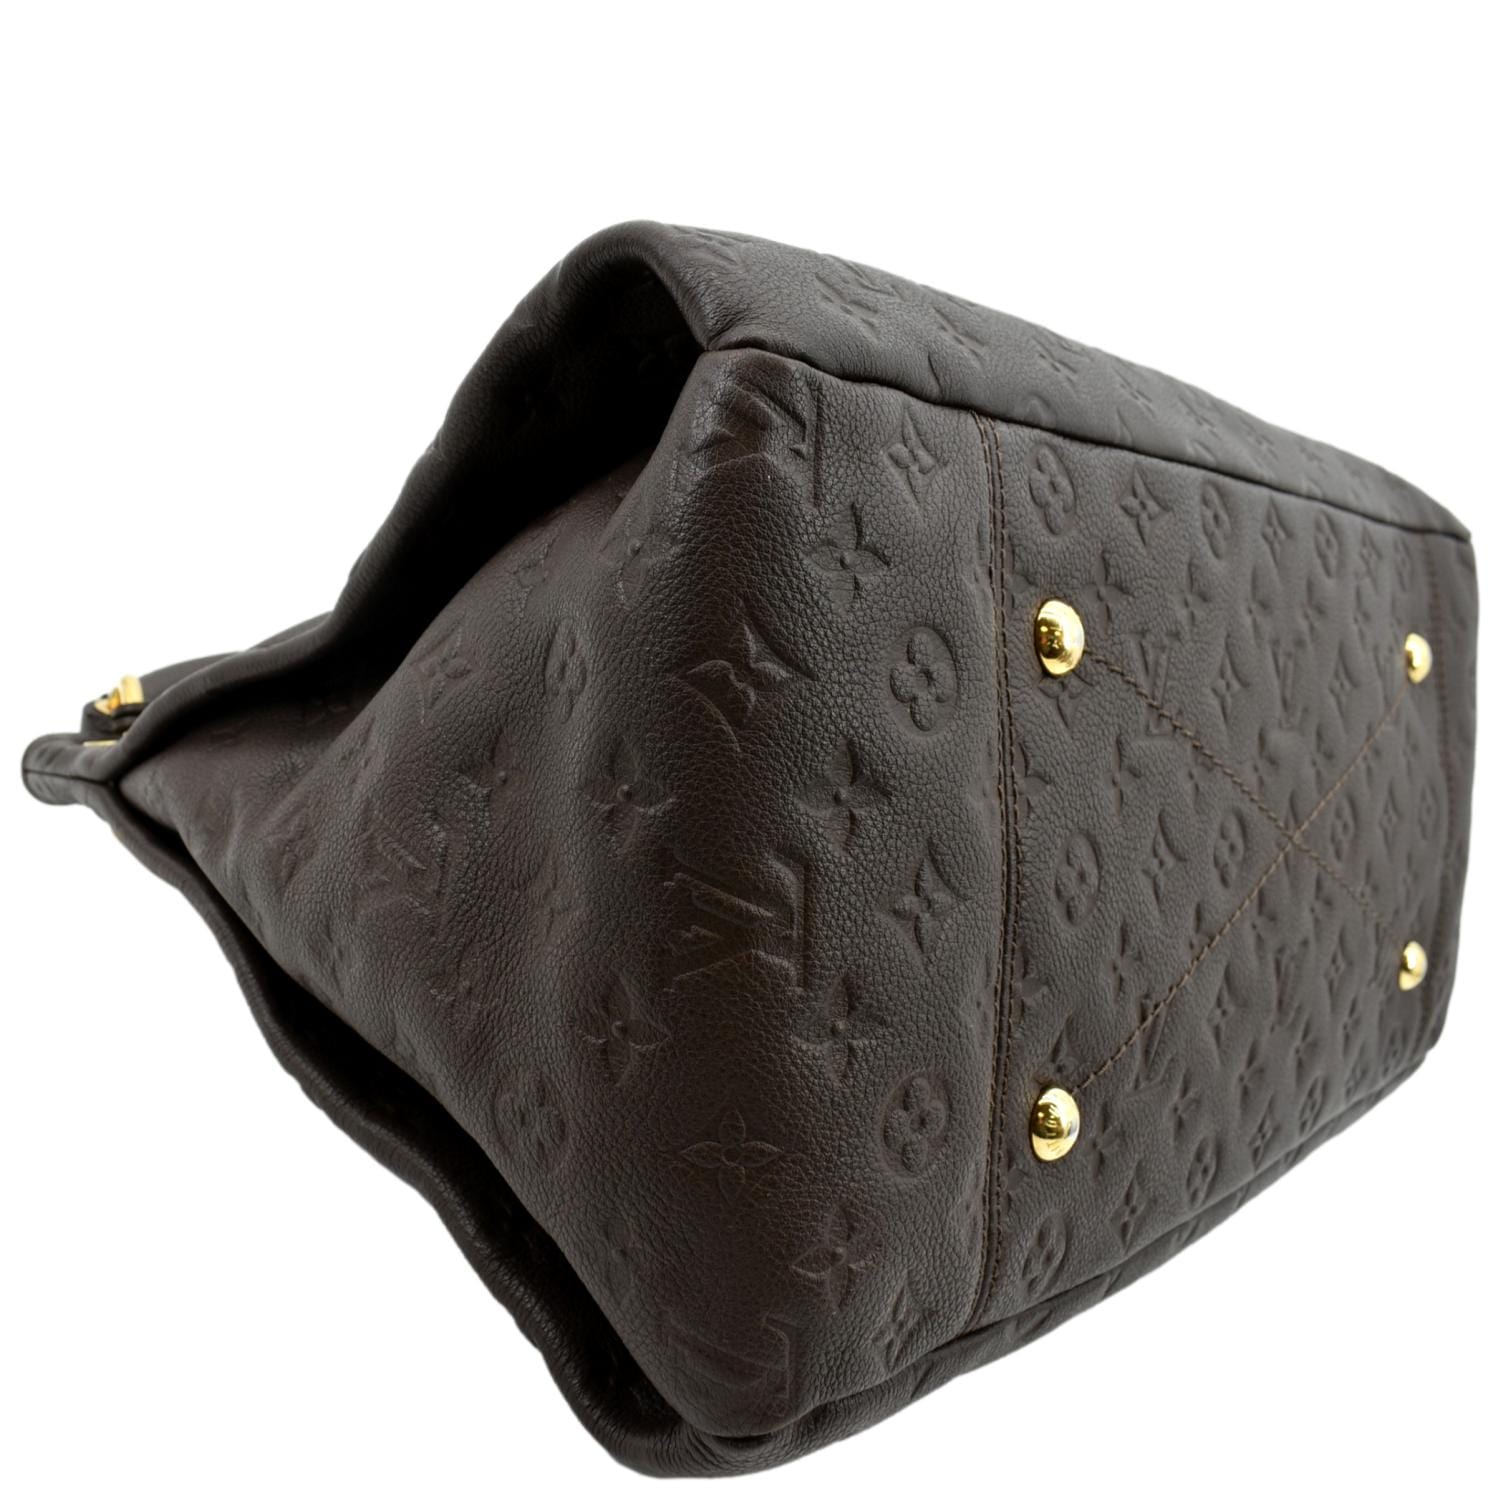 Louis Vuitton Artsy MM Empreinte Leather Hobo Bag Black